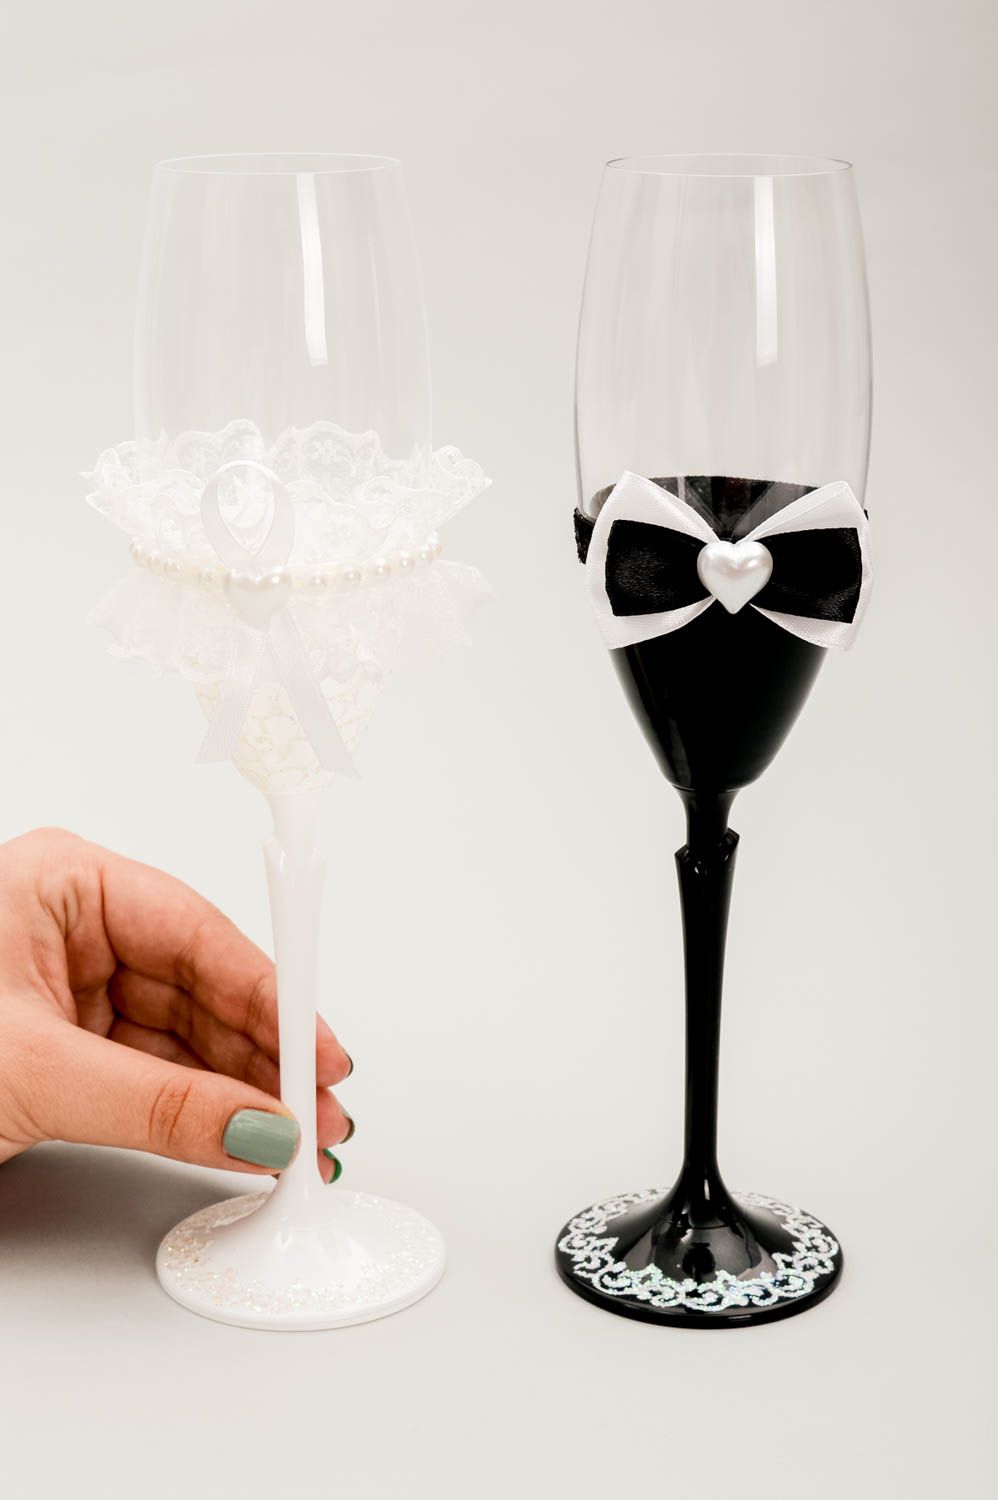 Handmade glasses designer glasses unusual wedding glasses gift ideas table decor photo 5